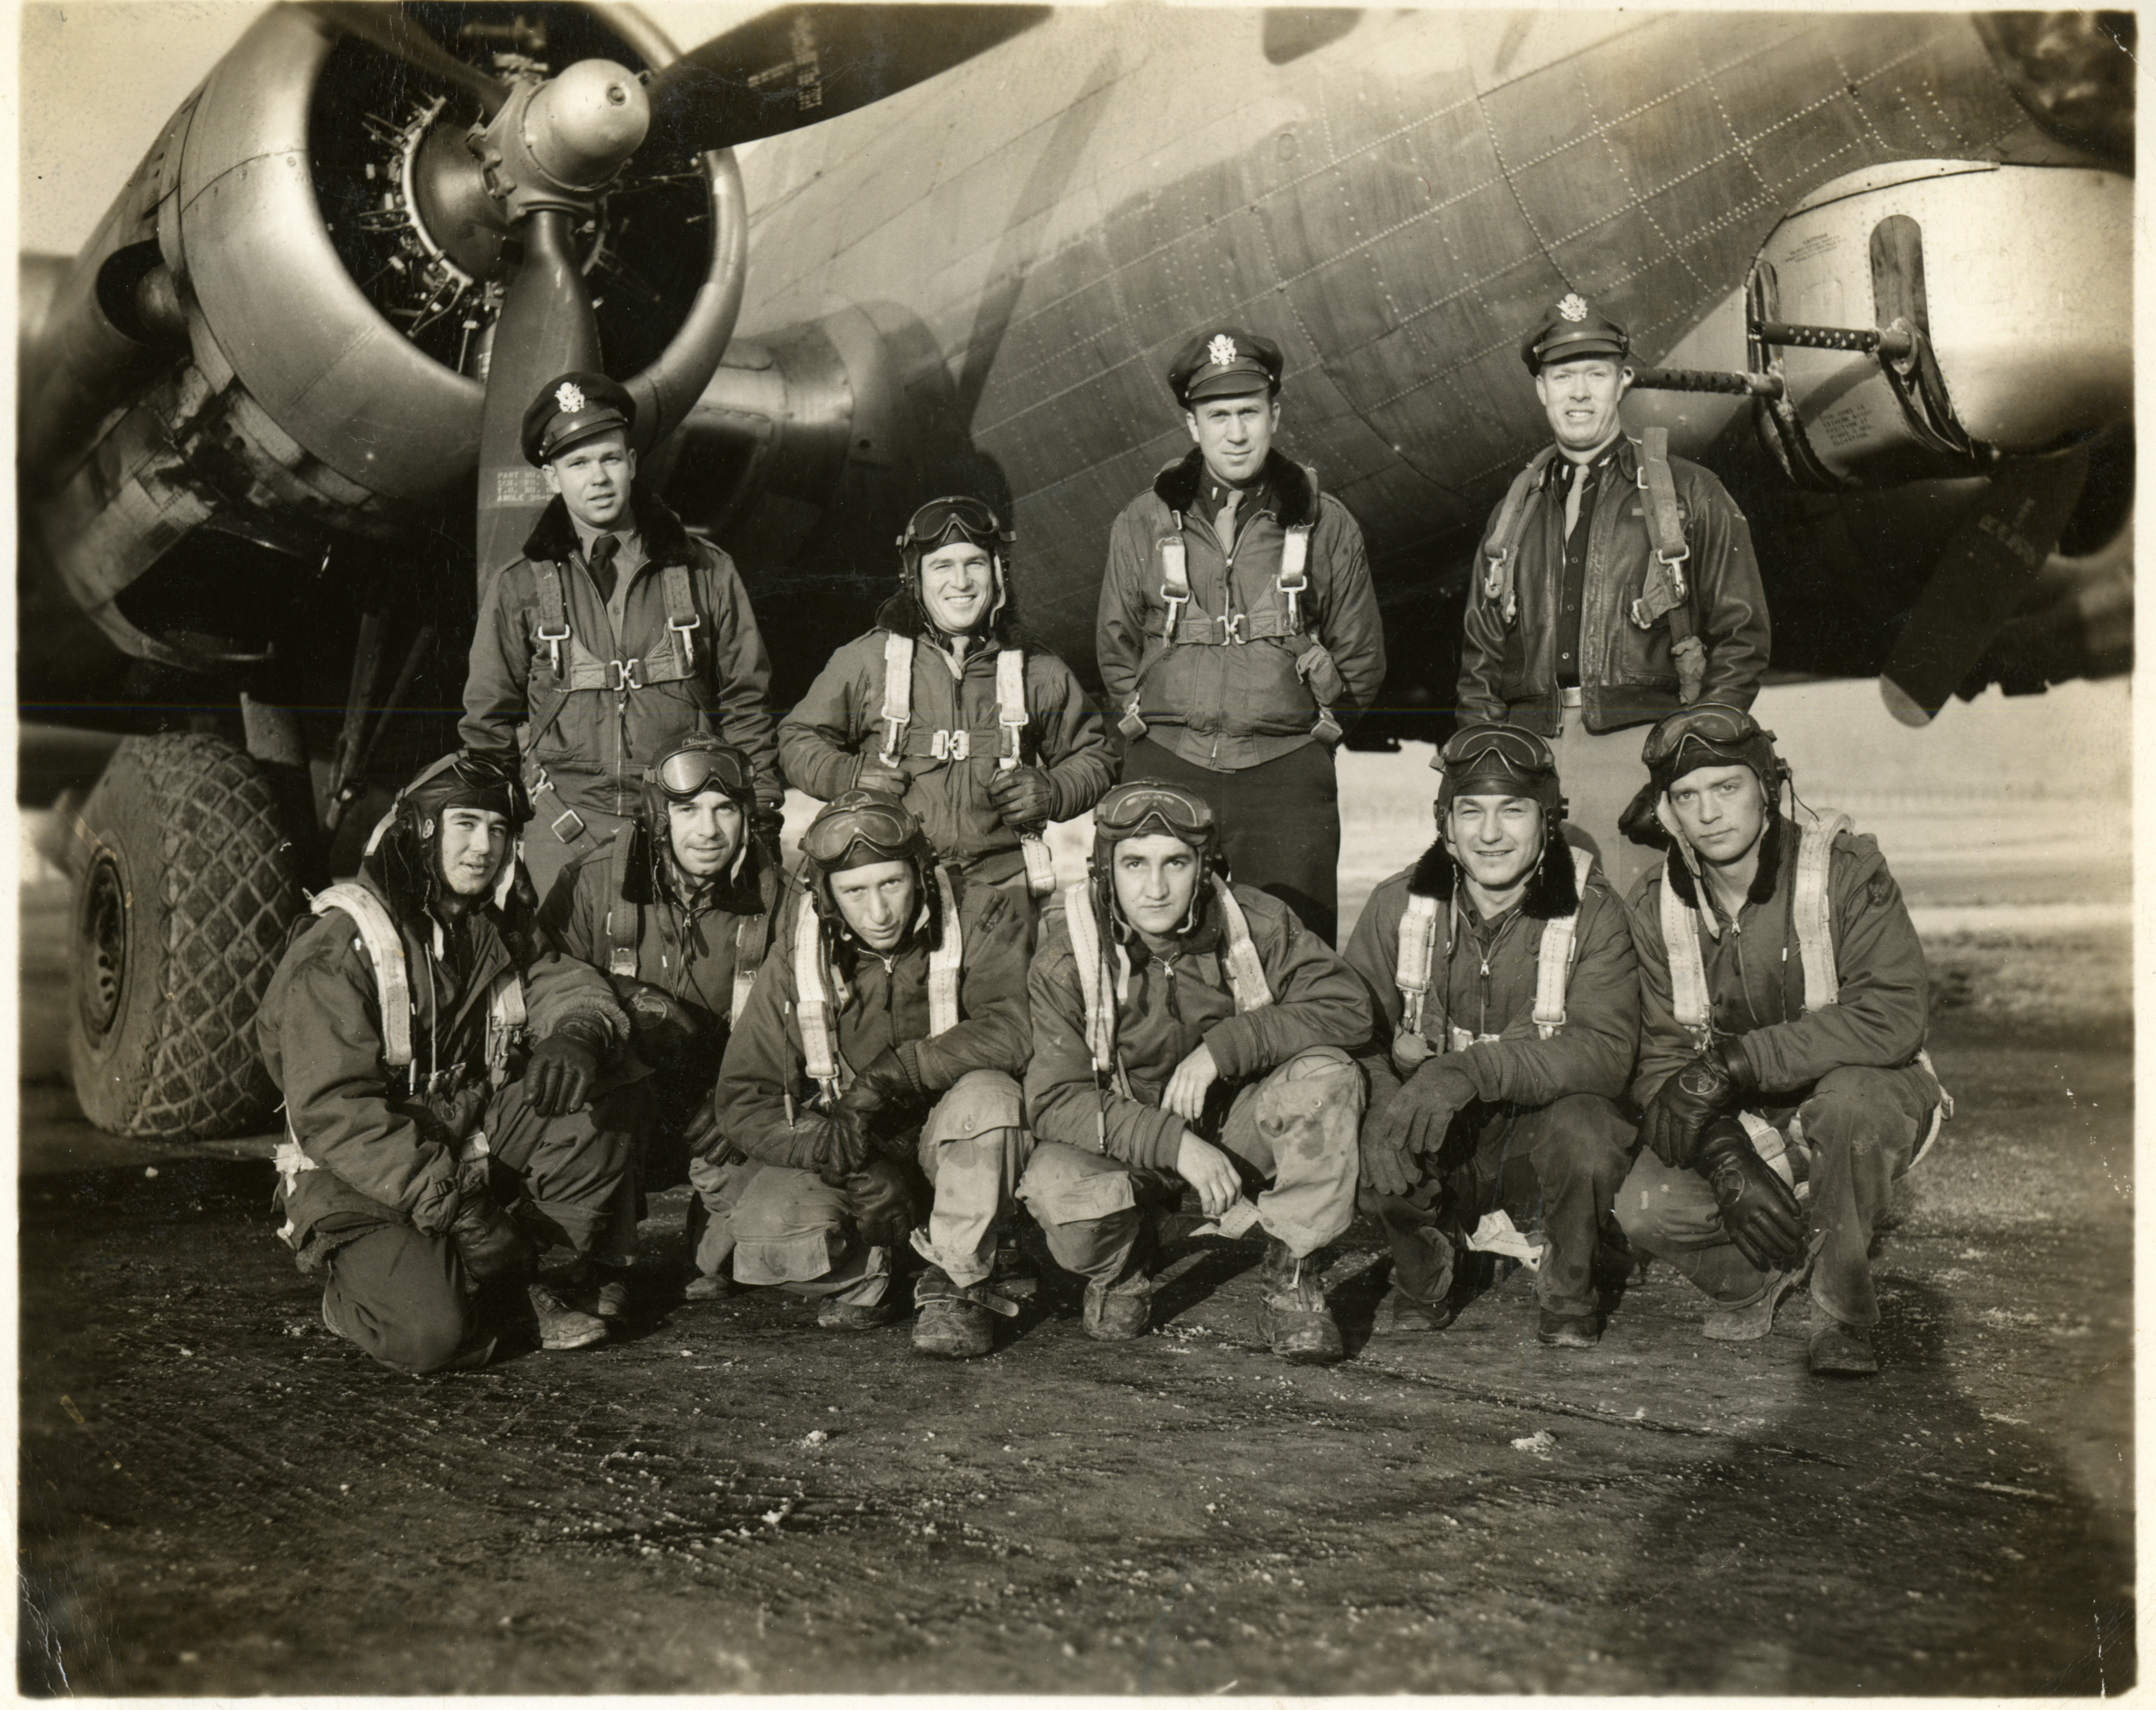 bomber crew .6018 version download free